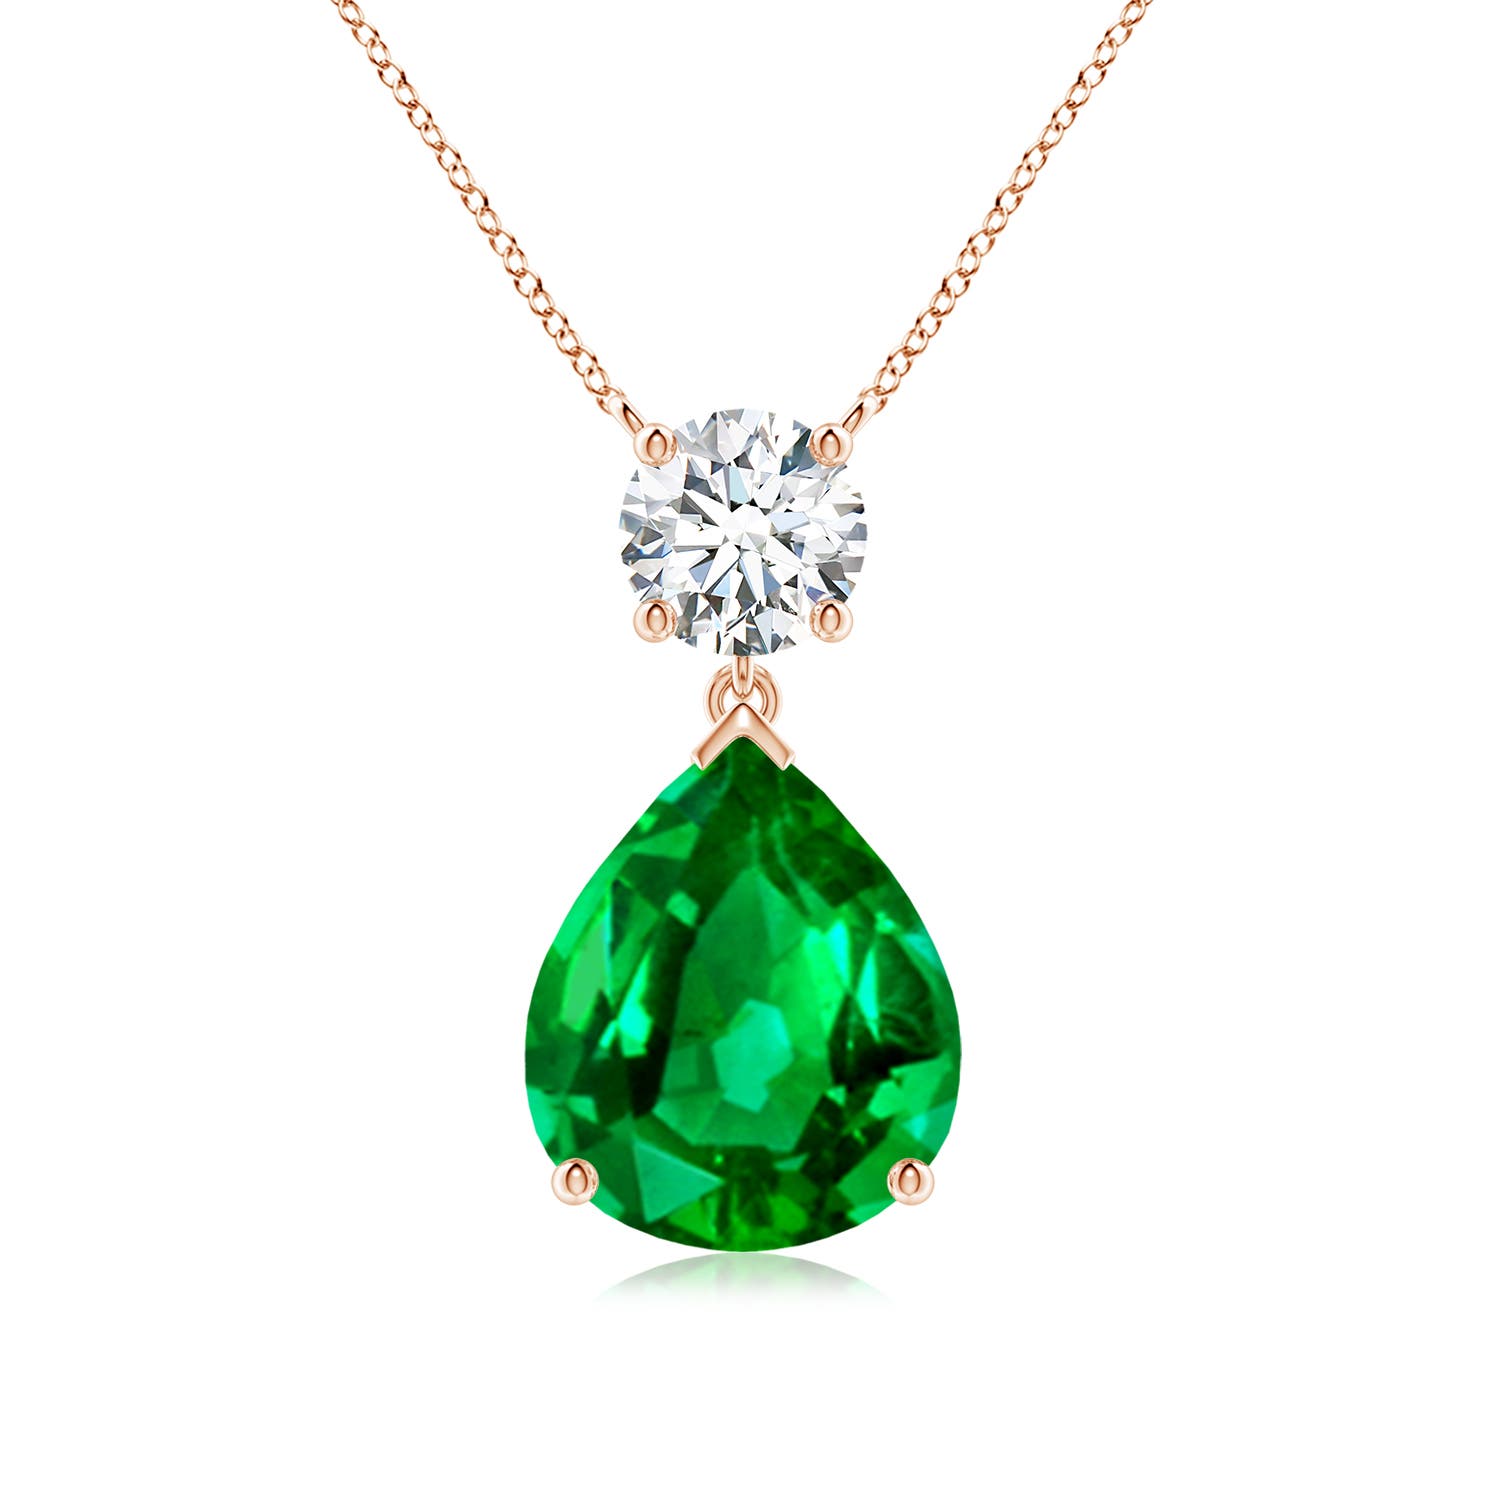 AAAA - Emerald / 5.21 CT / 18 KT Rose Gold